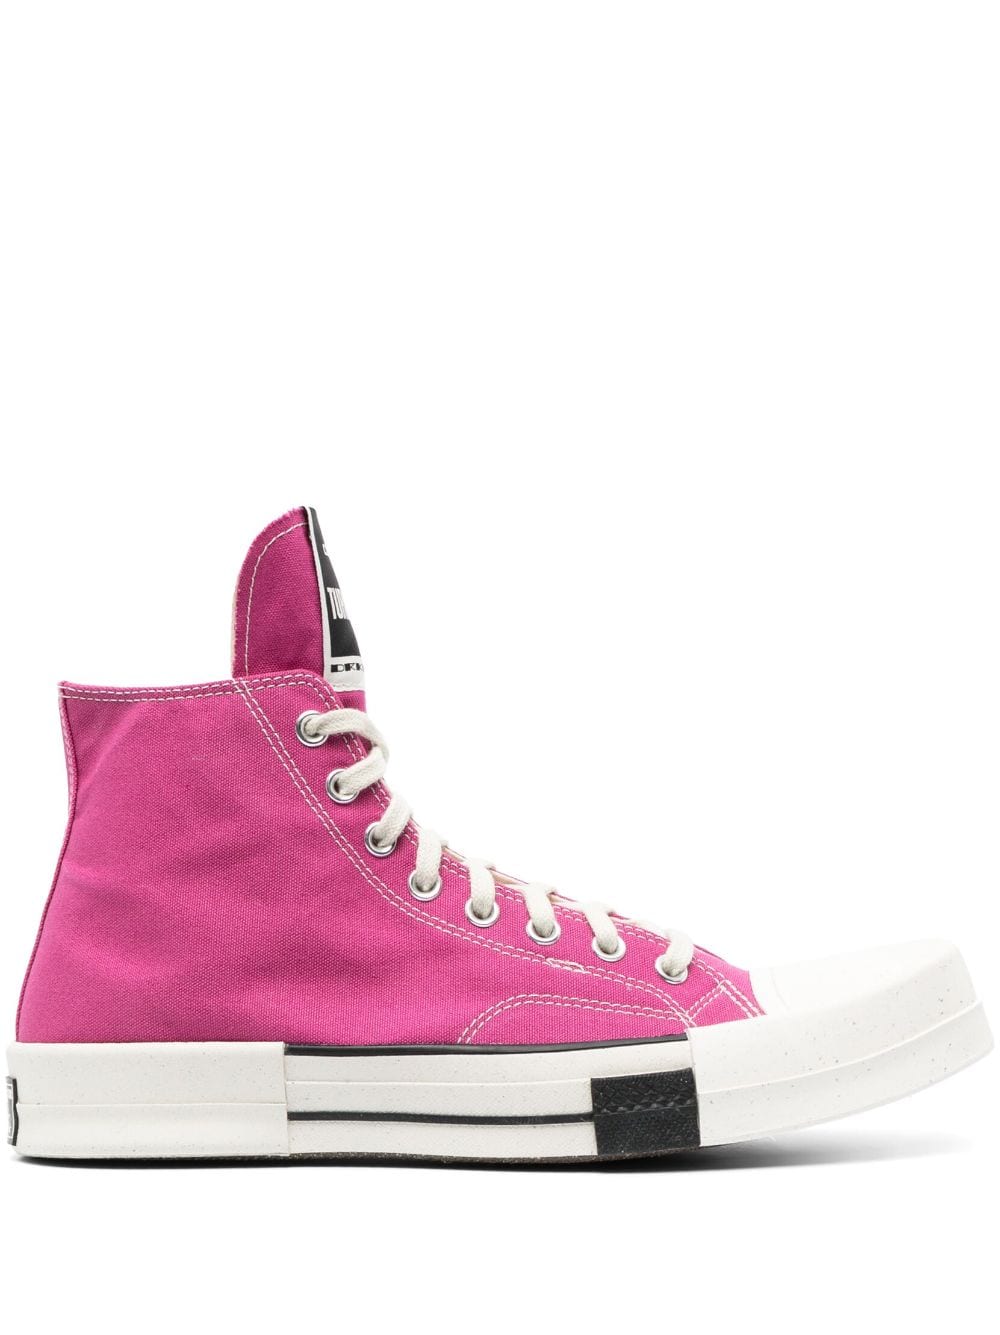 Drkshdw X Converse Turbodrk Laceless Sneakers In Hot Pink